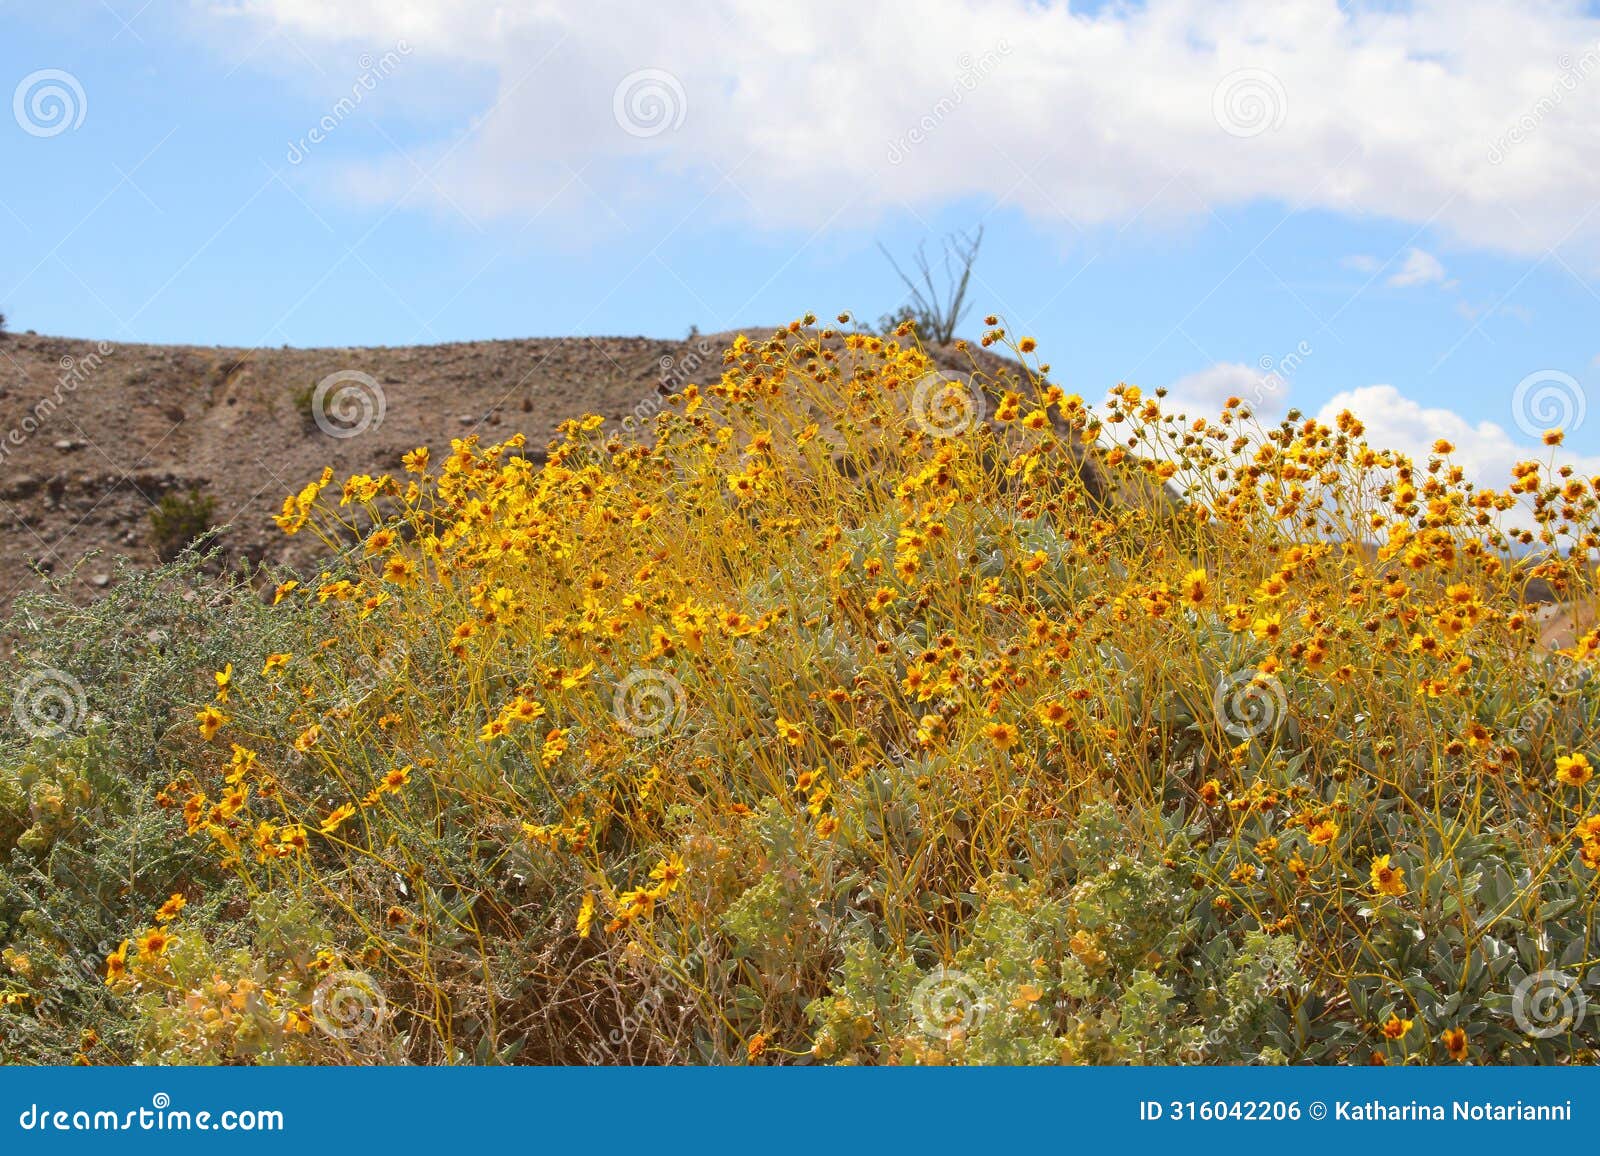 california park series - anza-borrego desert - brittlebush flowering plant - encelia farinosa